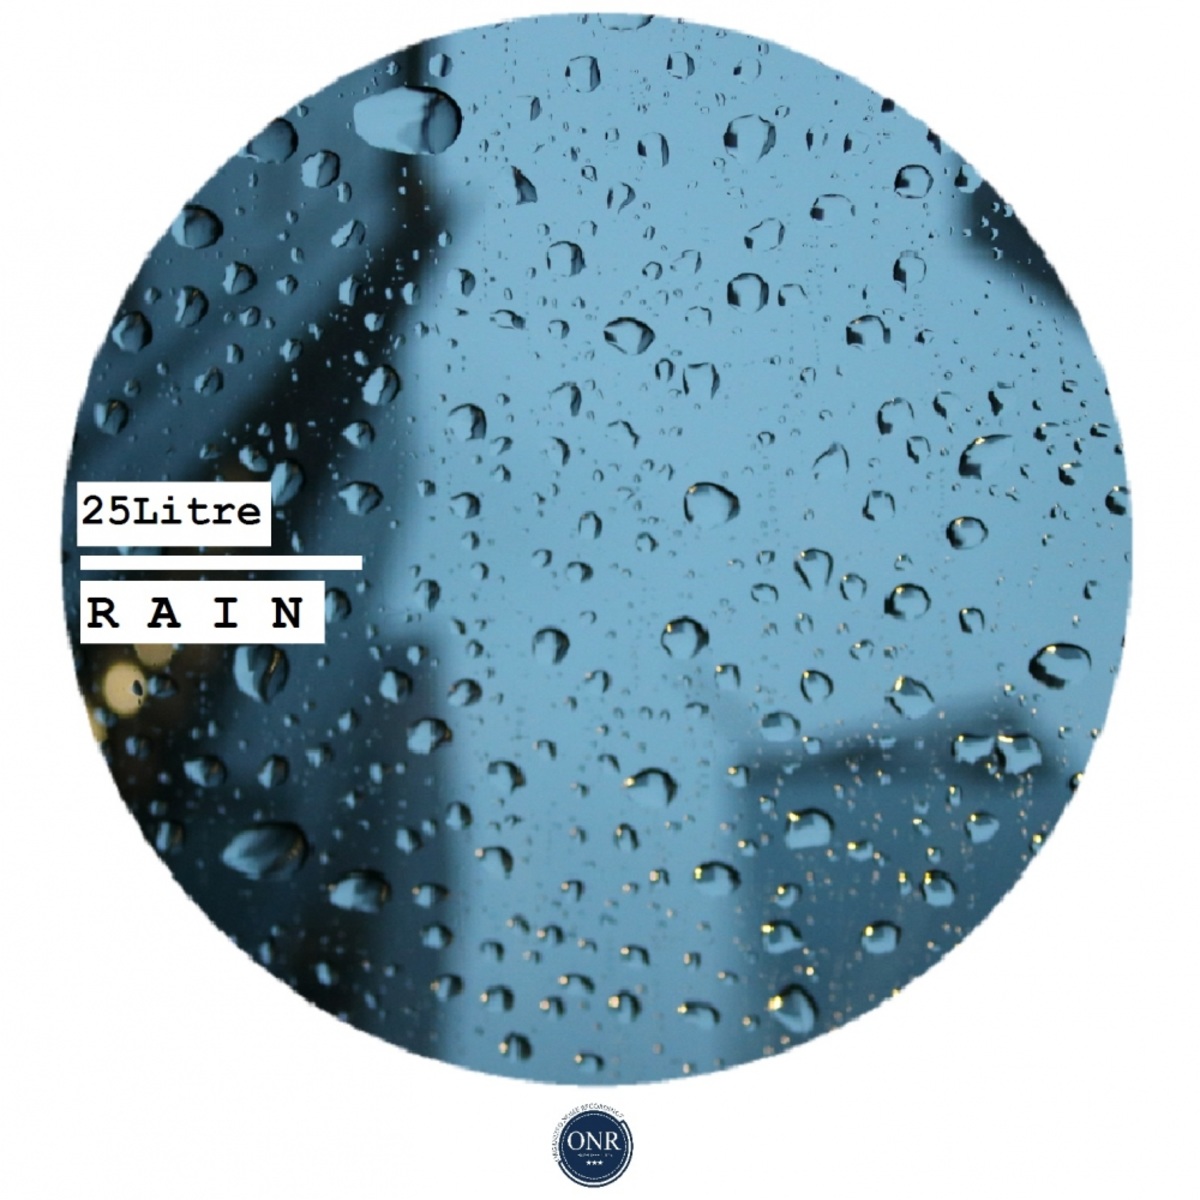 25Litre - Rain / Organized Noize Recordingz